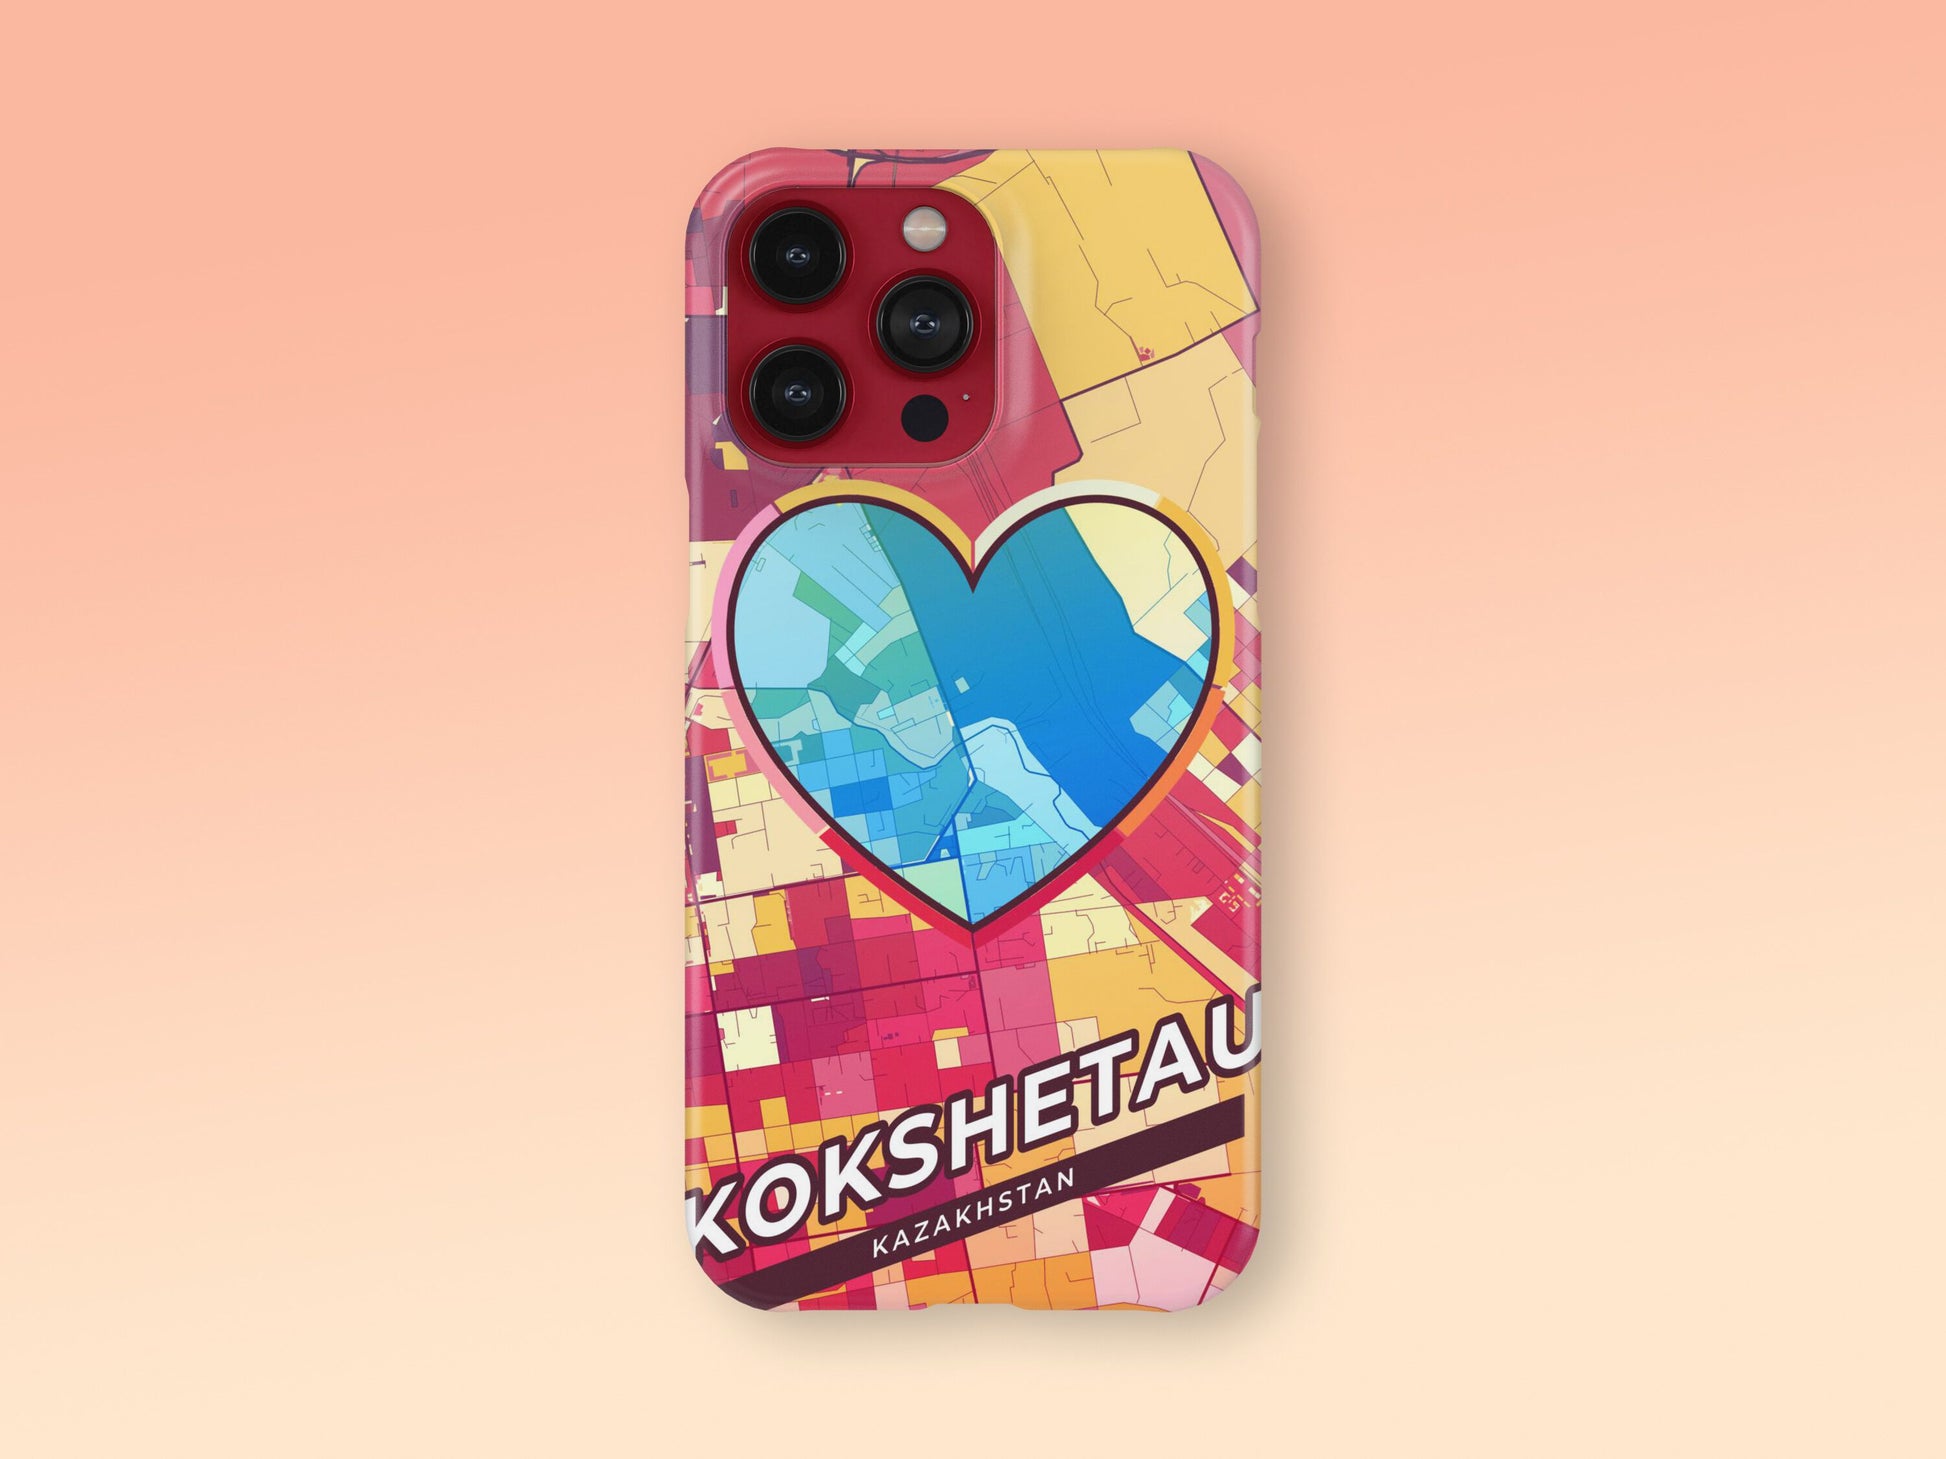 Kokshetau Kazakhstan slim phone case with colorful icon. Birthday, wedding or housewarming gift. Couple match cases. 2